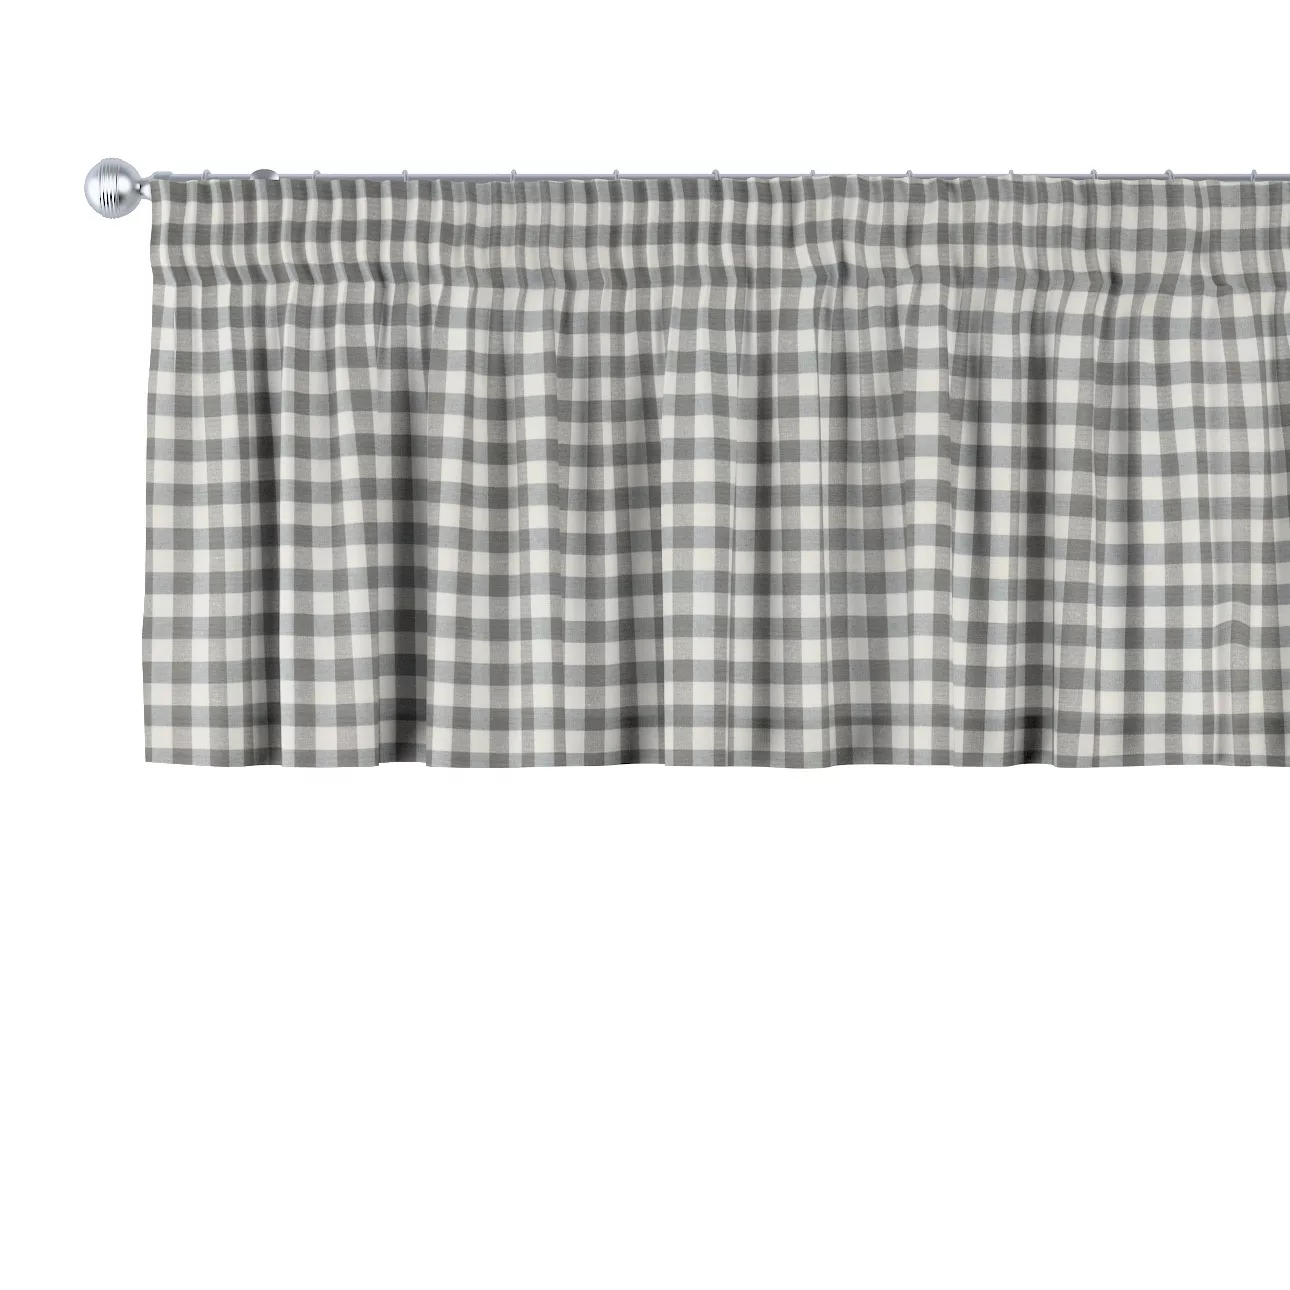 Kurzgardine mit Kräuselband, grau-ecru , 390 x 40 cm, Quadro (136-11) günstig online kaufen